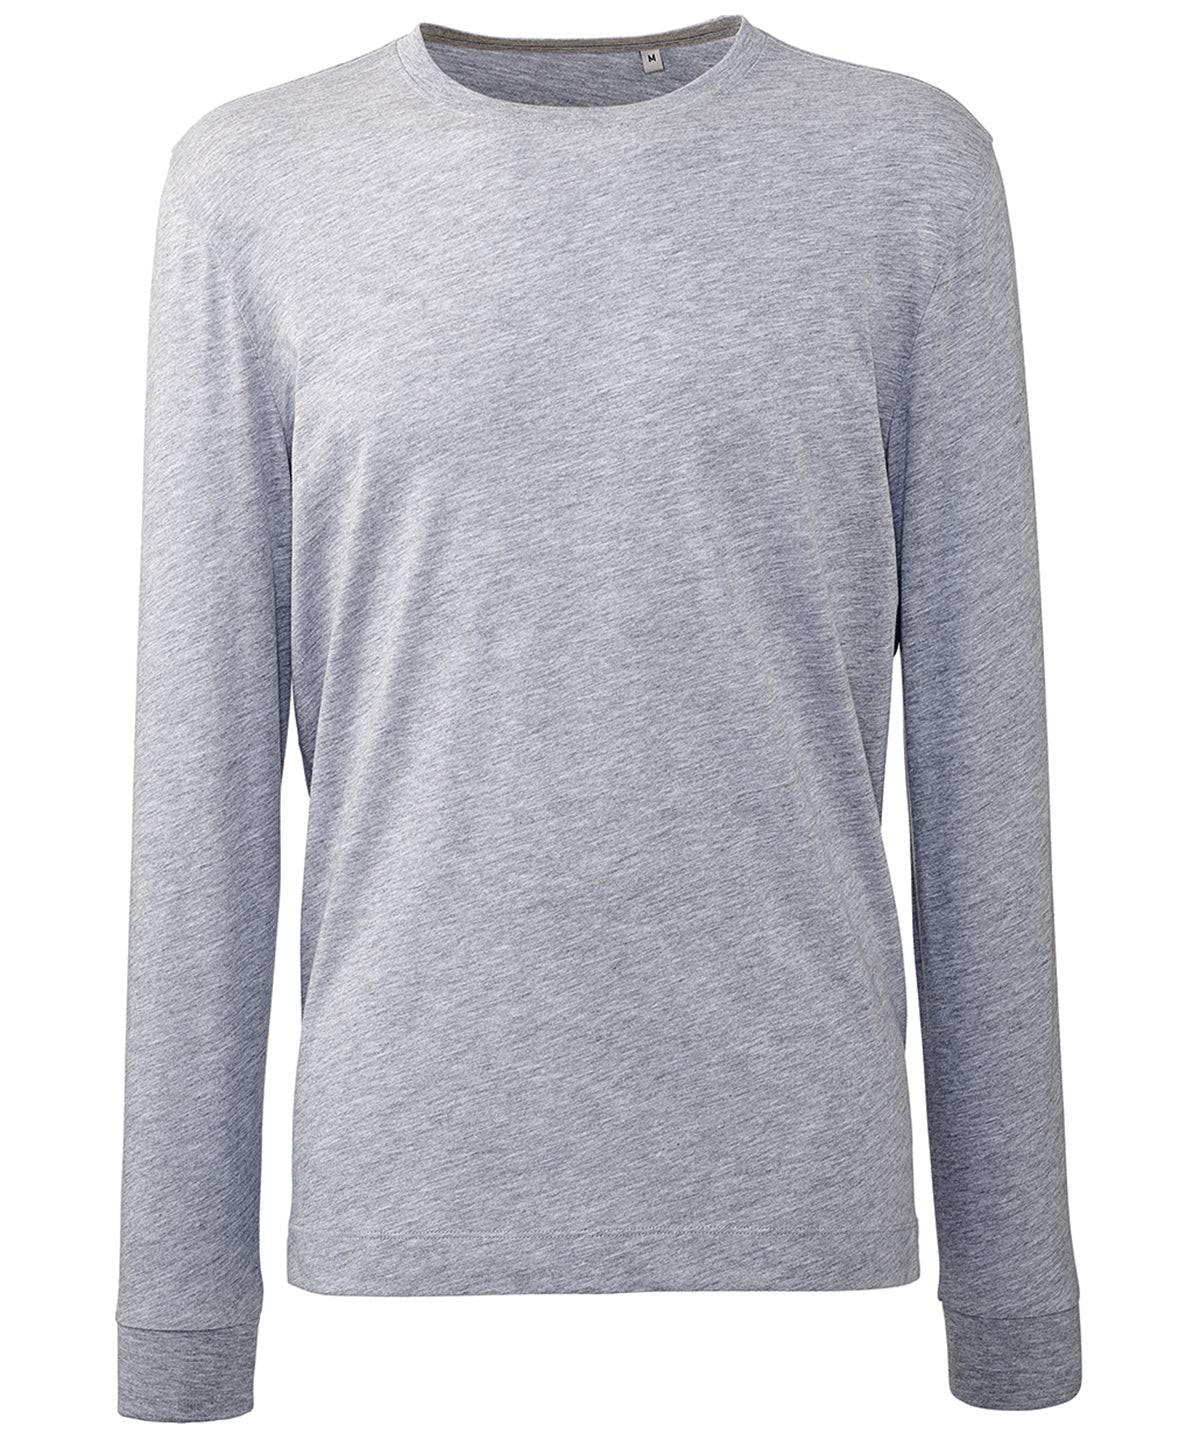 Grey Marl - Men's long sleeve Anthem t-shirt